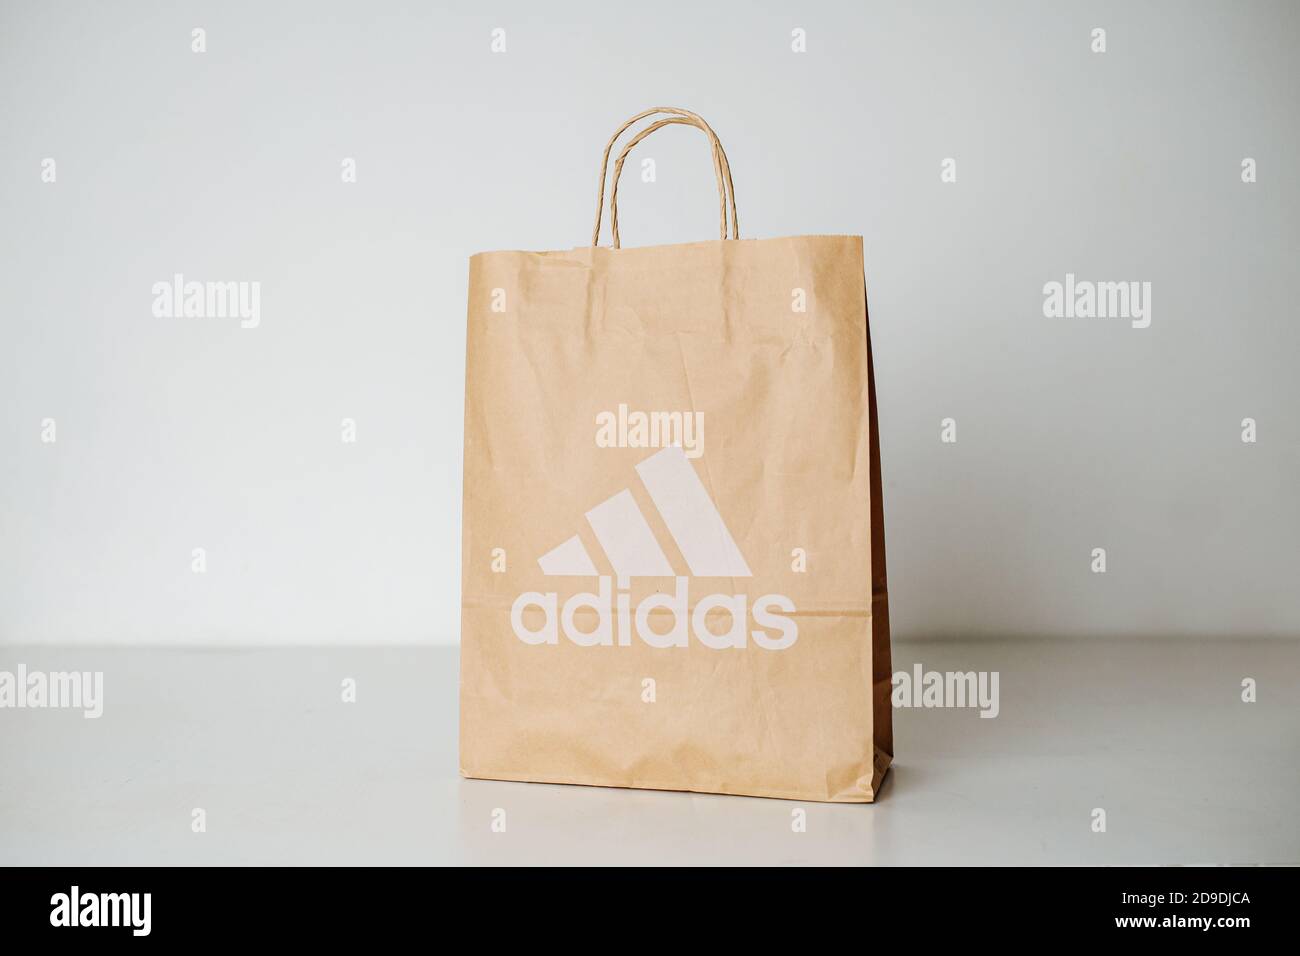 RUSSIA, UFA - NOVEMBER 02, 2020:Black adidas shoe box on white table Stock  Photo - Alamy